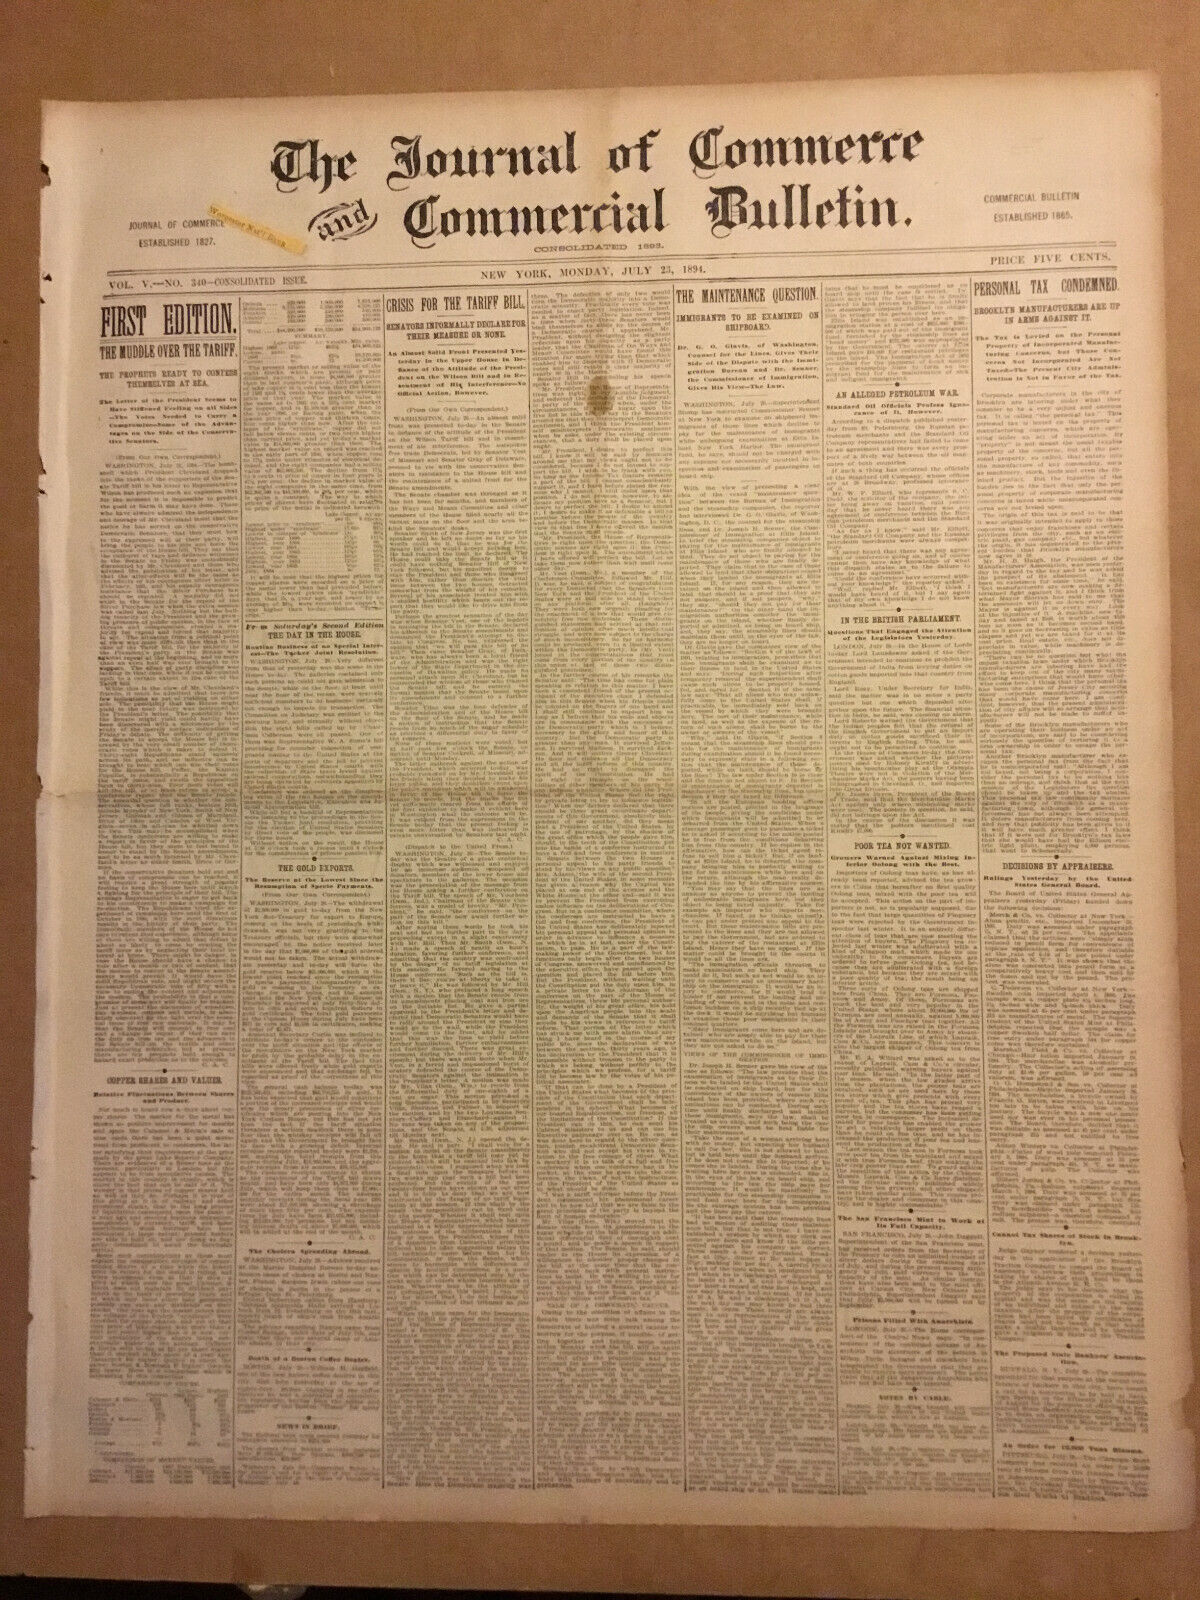 The Journal of Commerce 1894 Tariff Bill. Gold Exports. Petro War. Bridge Plans